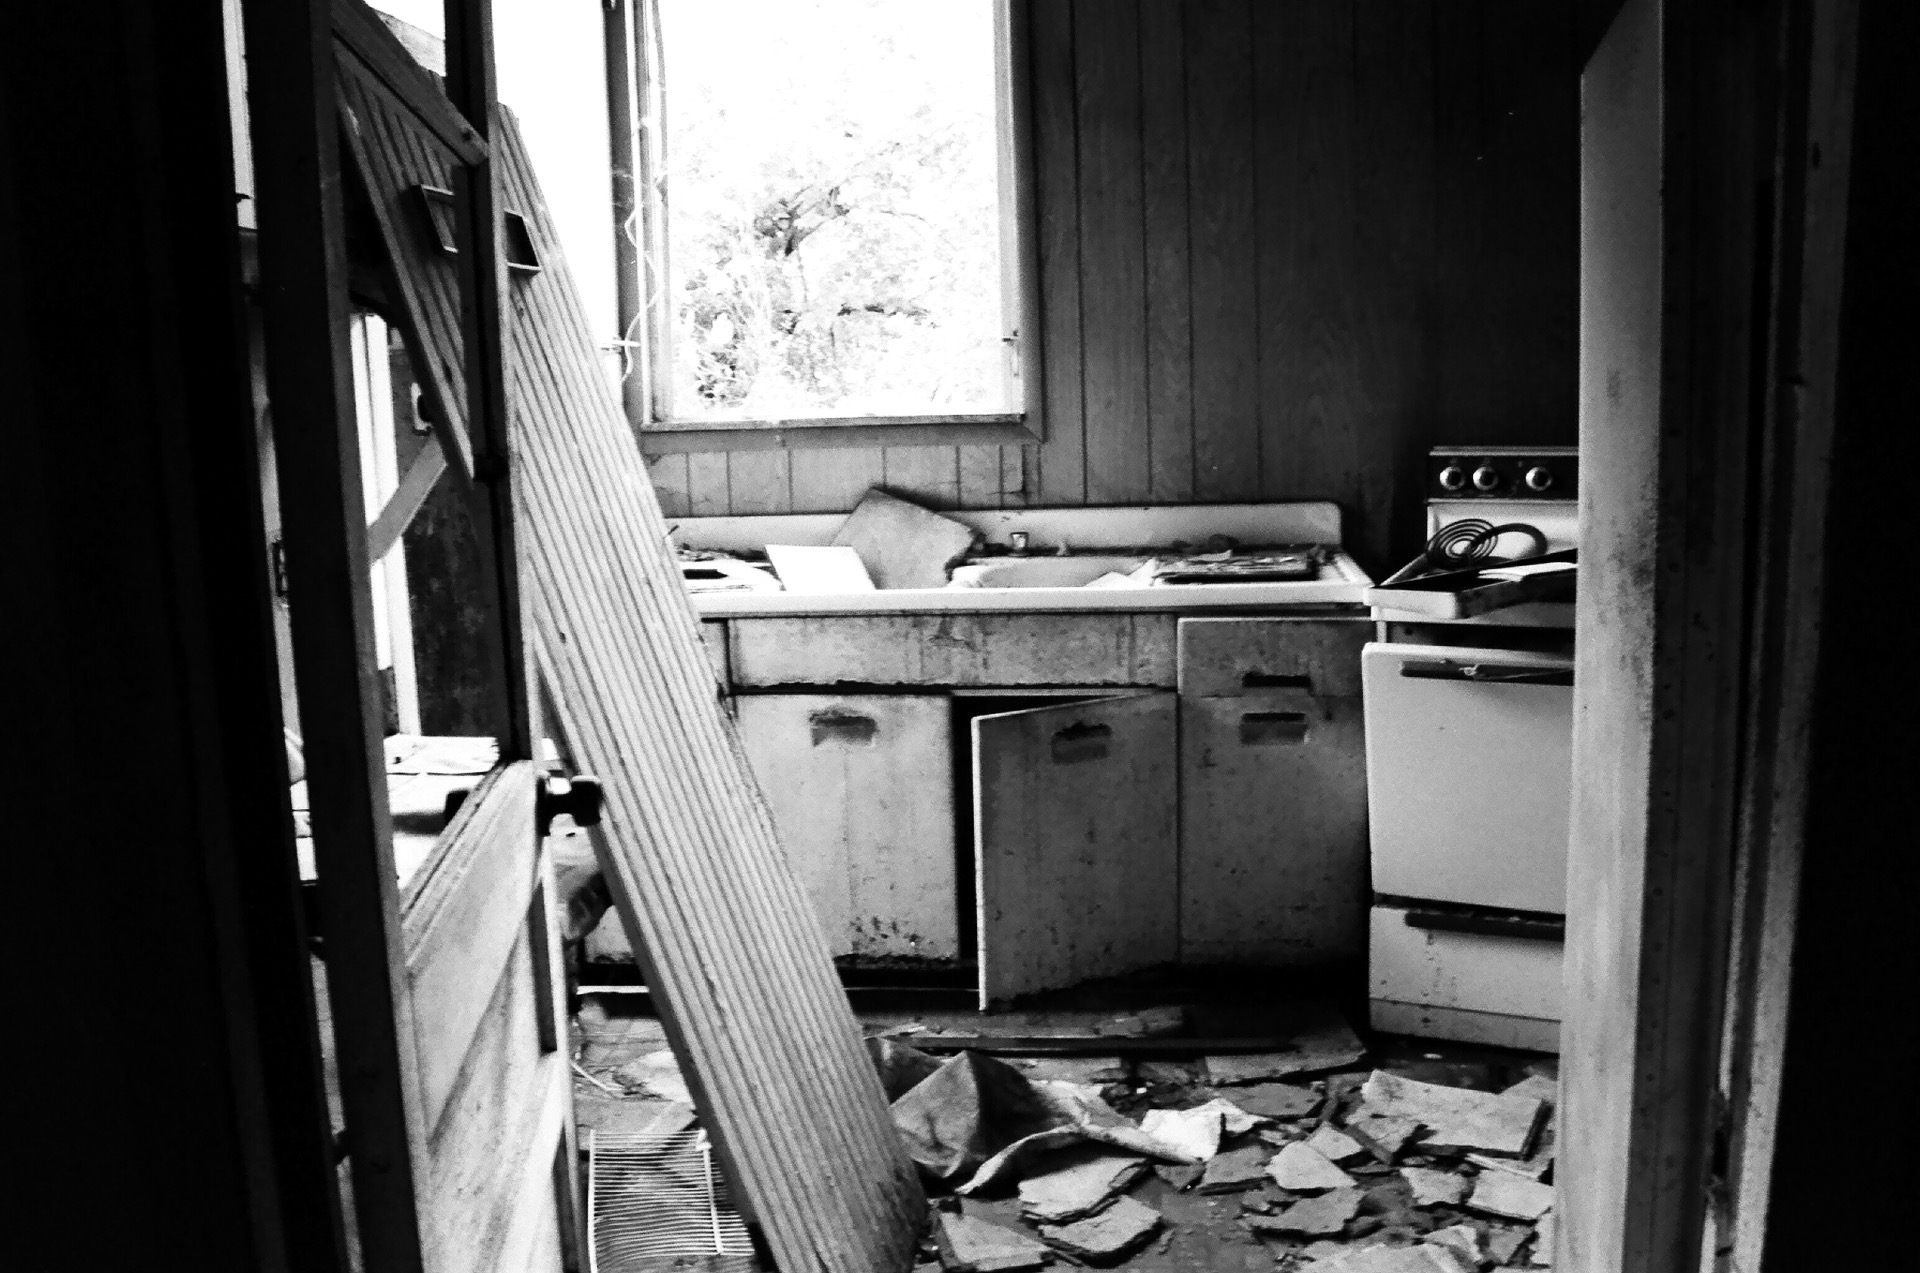 Messy Kitchen – The Vintage Lens